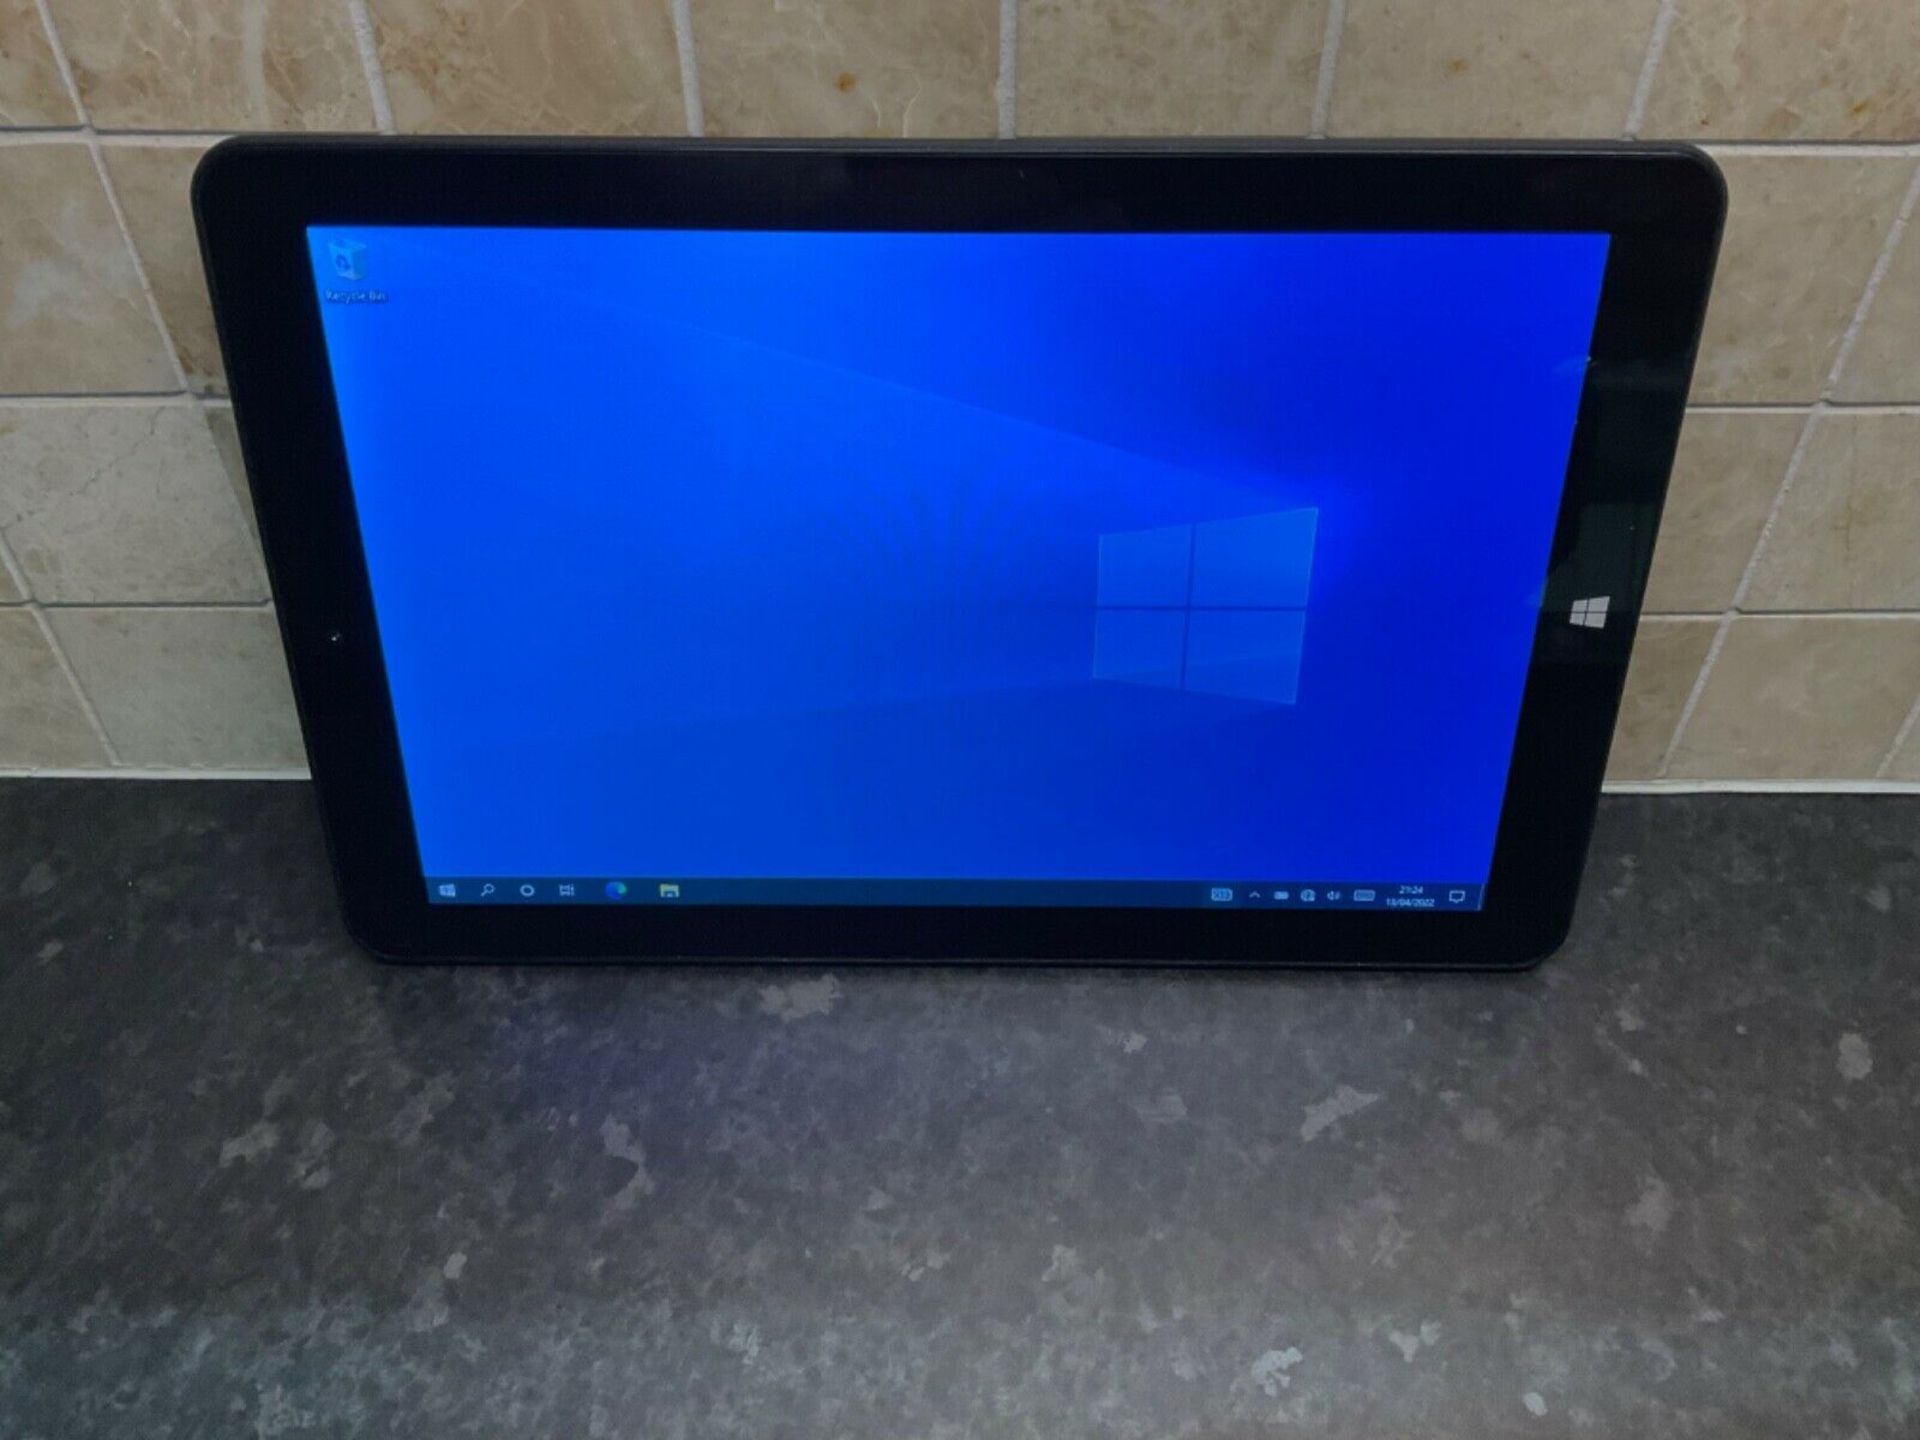 Linx 1010B Windows 10 Tablet Pc 10.1” Touchscreen 32Gb Intel Atom Quad Keyboard - Image 3 of 8